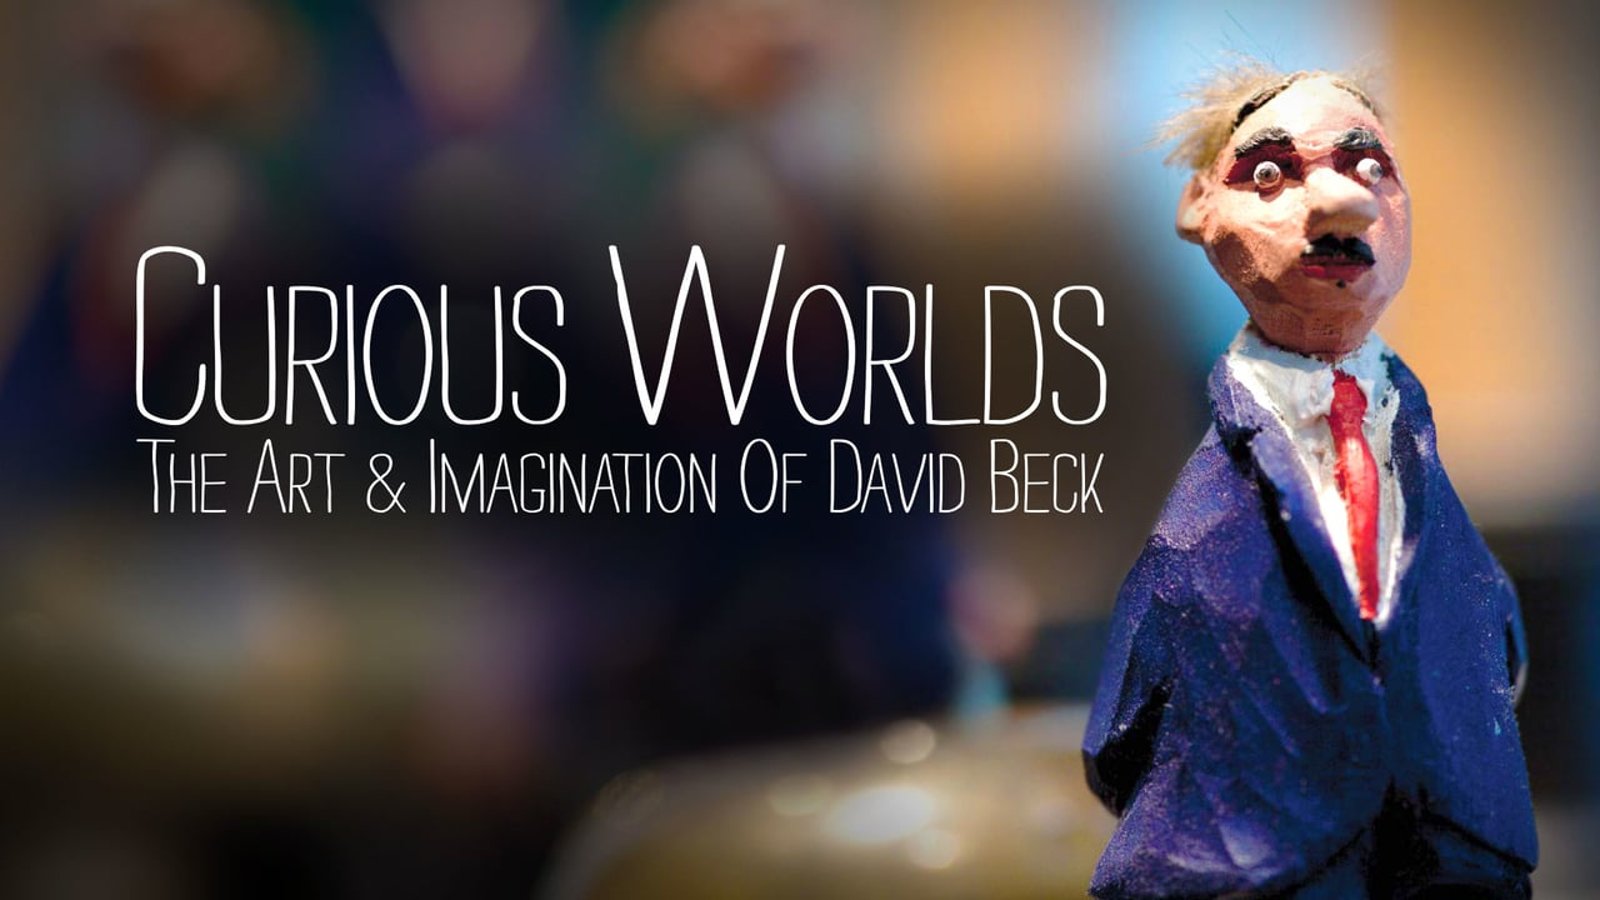 Curious Worlds - The Art & Imagination of David Beck